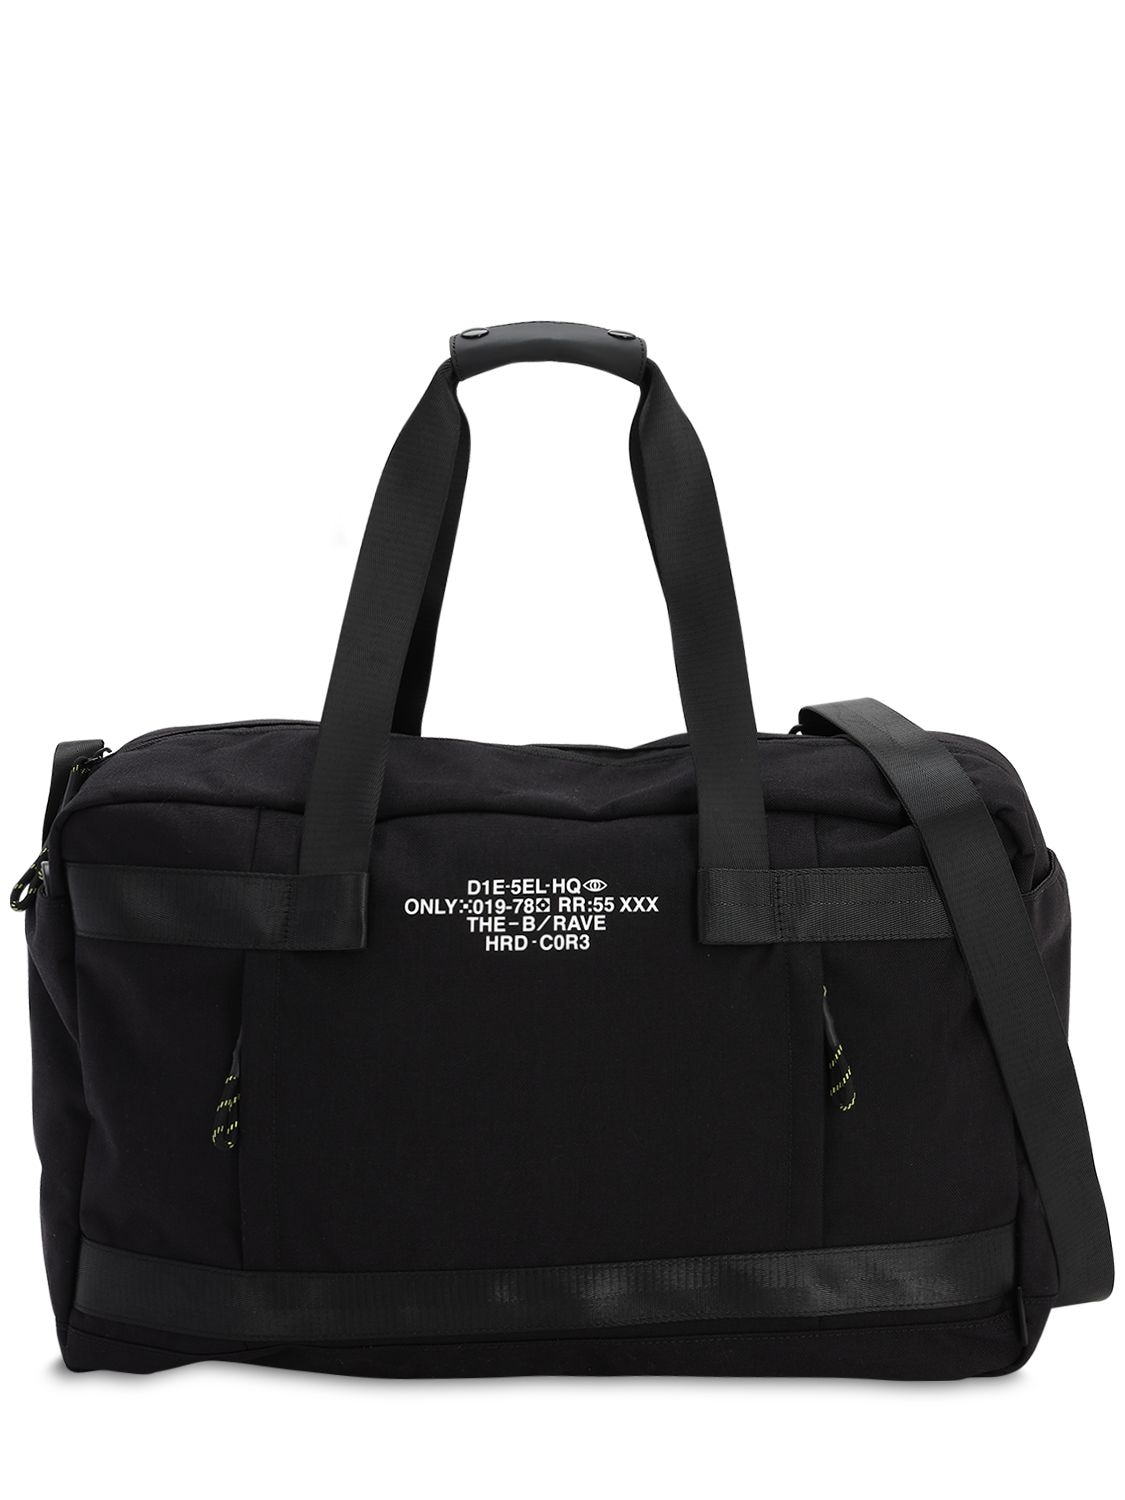 Diesel Tech Canvas Duffle Bag In Black | ModeSens